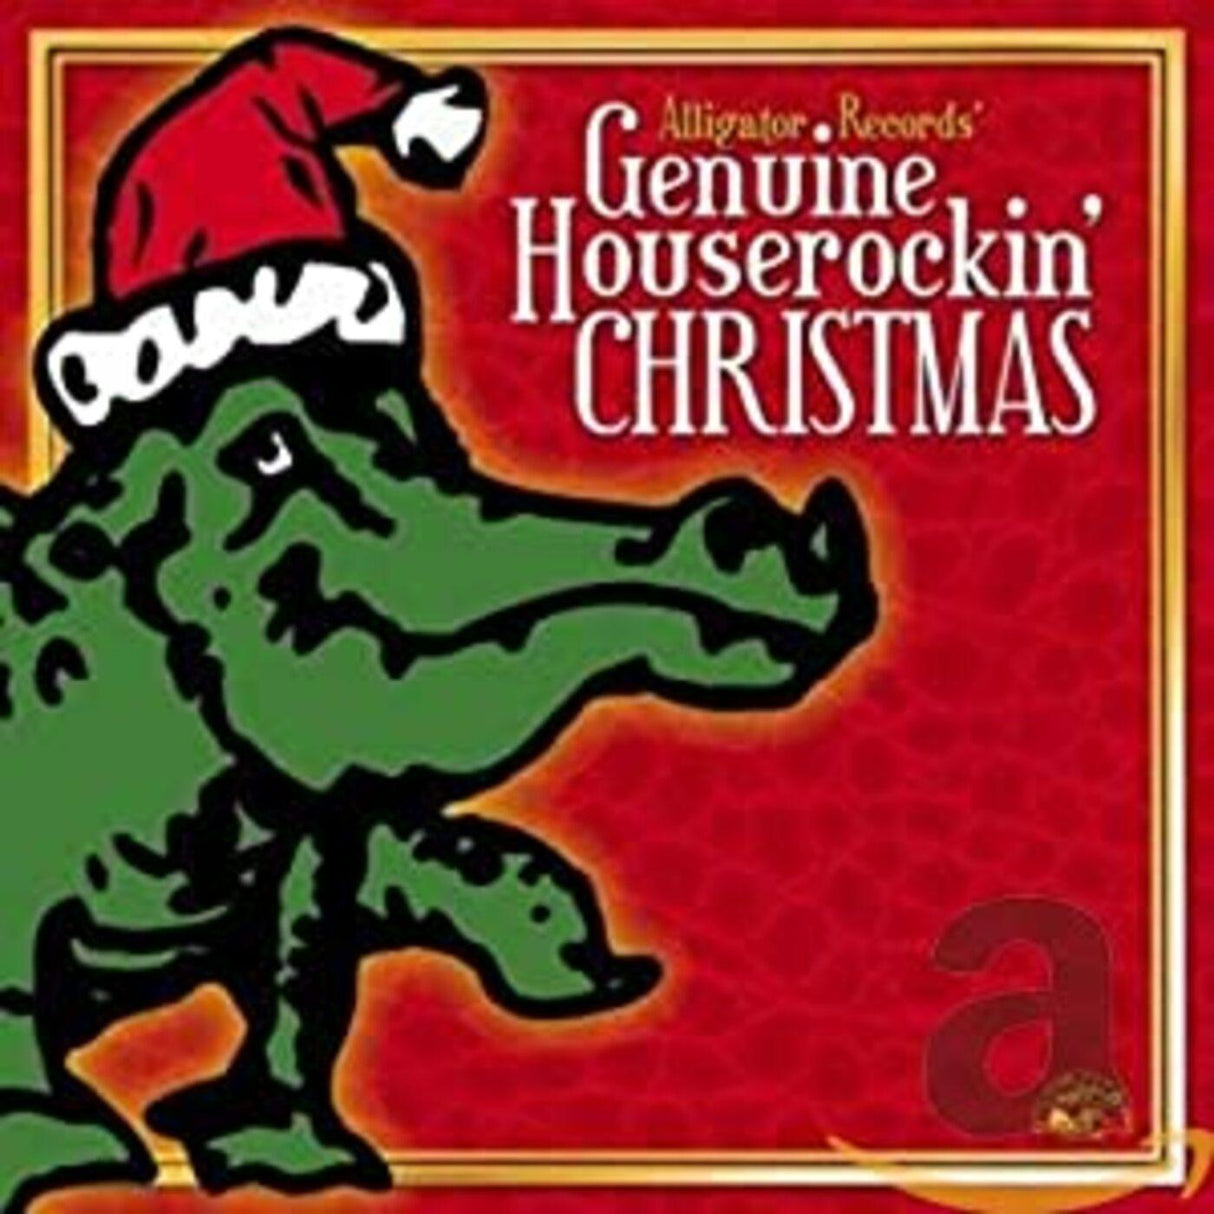 Genuine Houserockin Christmas [CD]